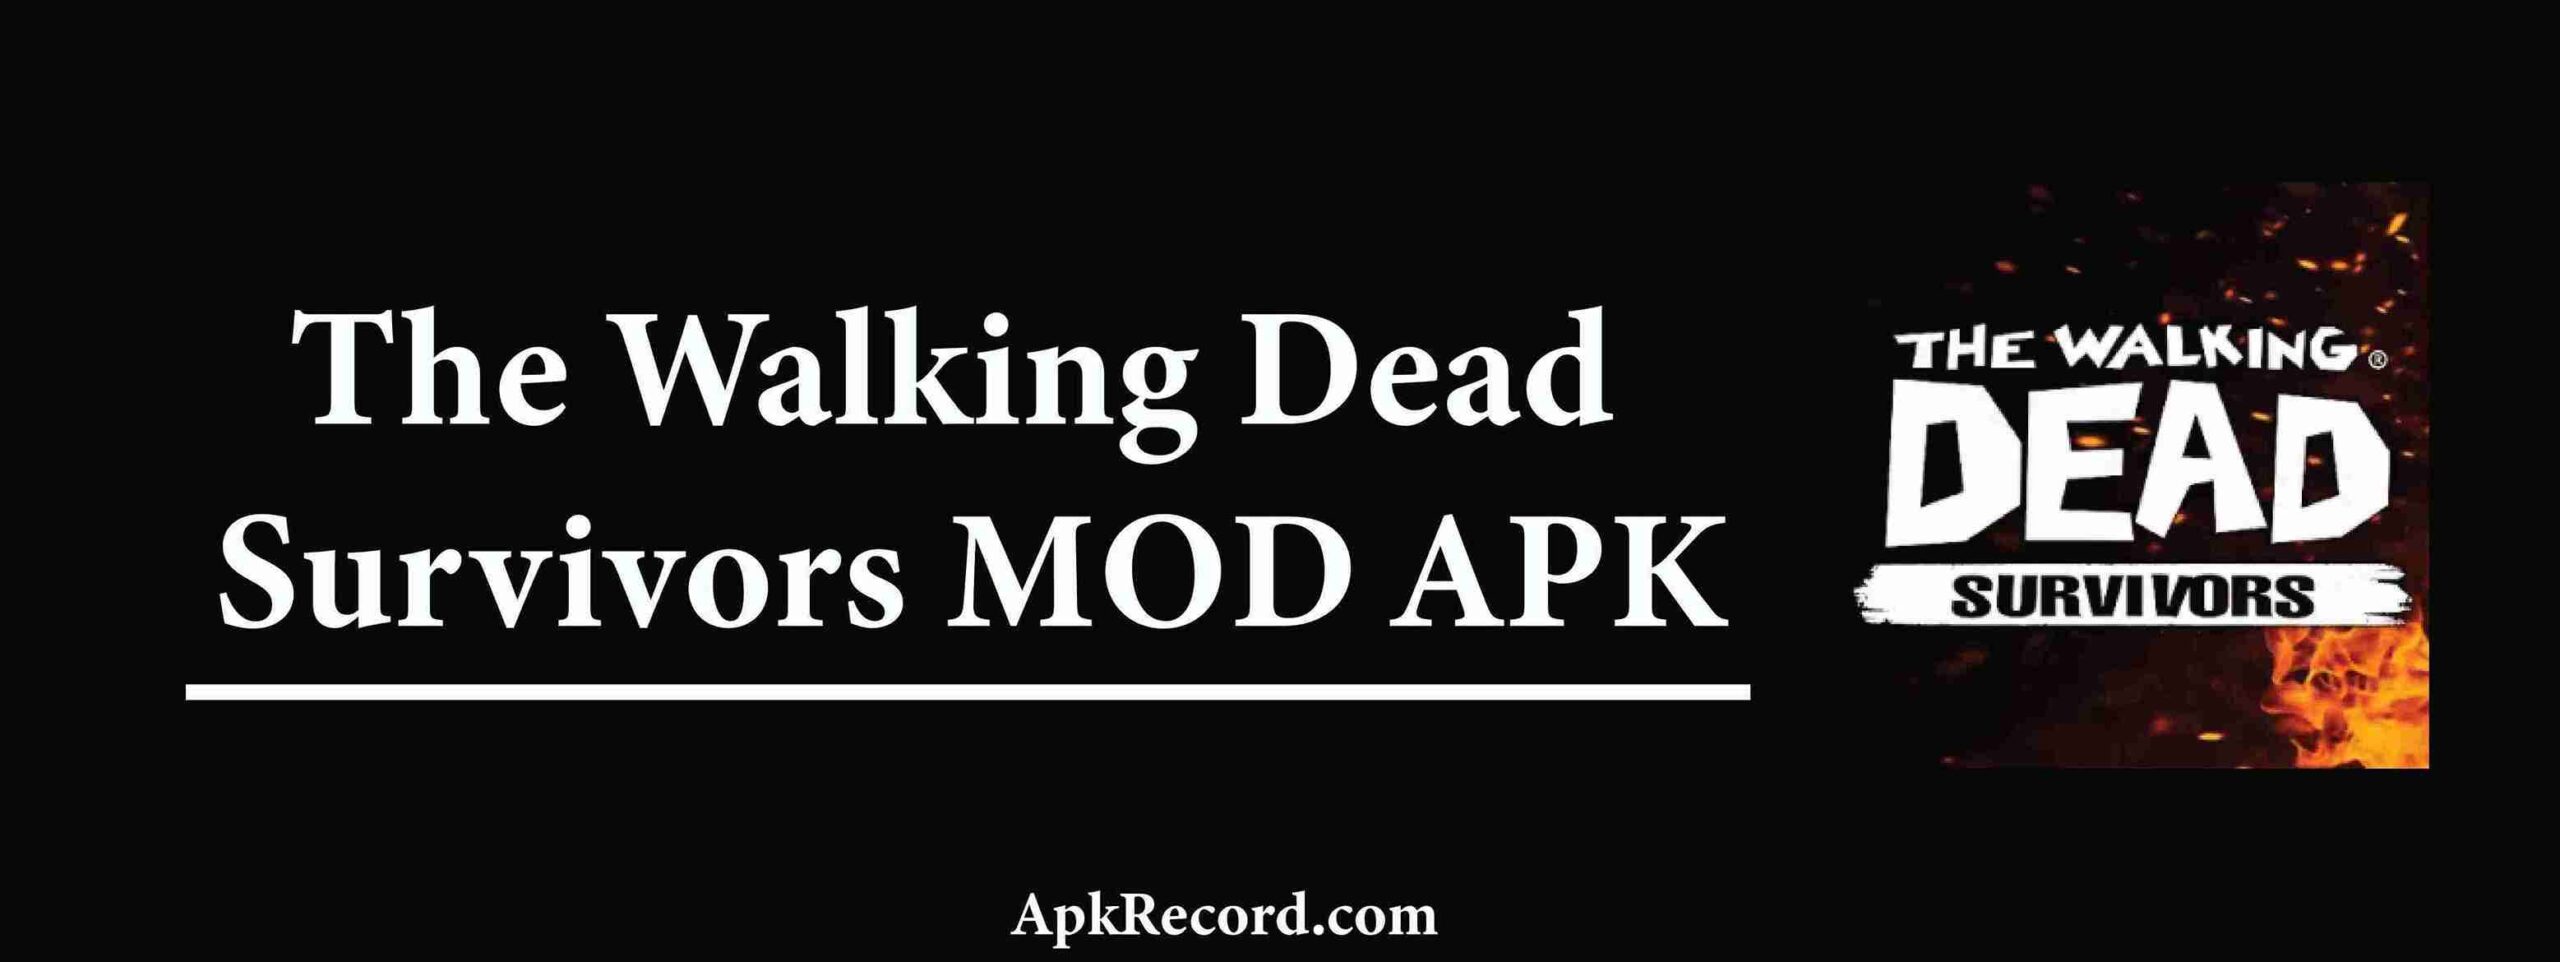 The Walking Dead Survivors MOD APK V5.19.0